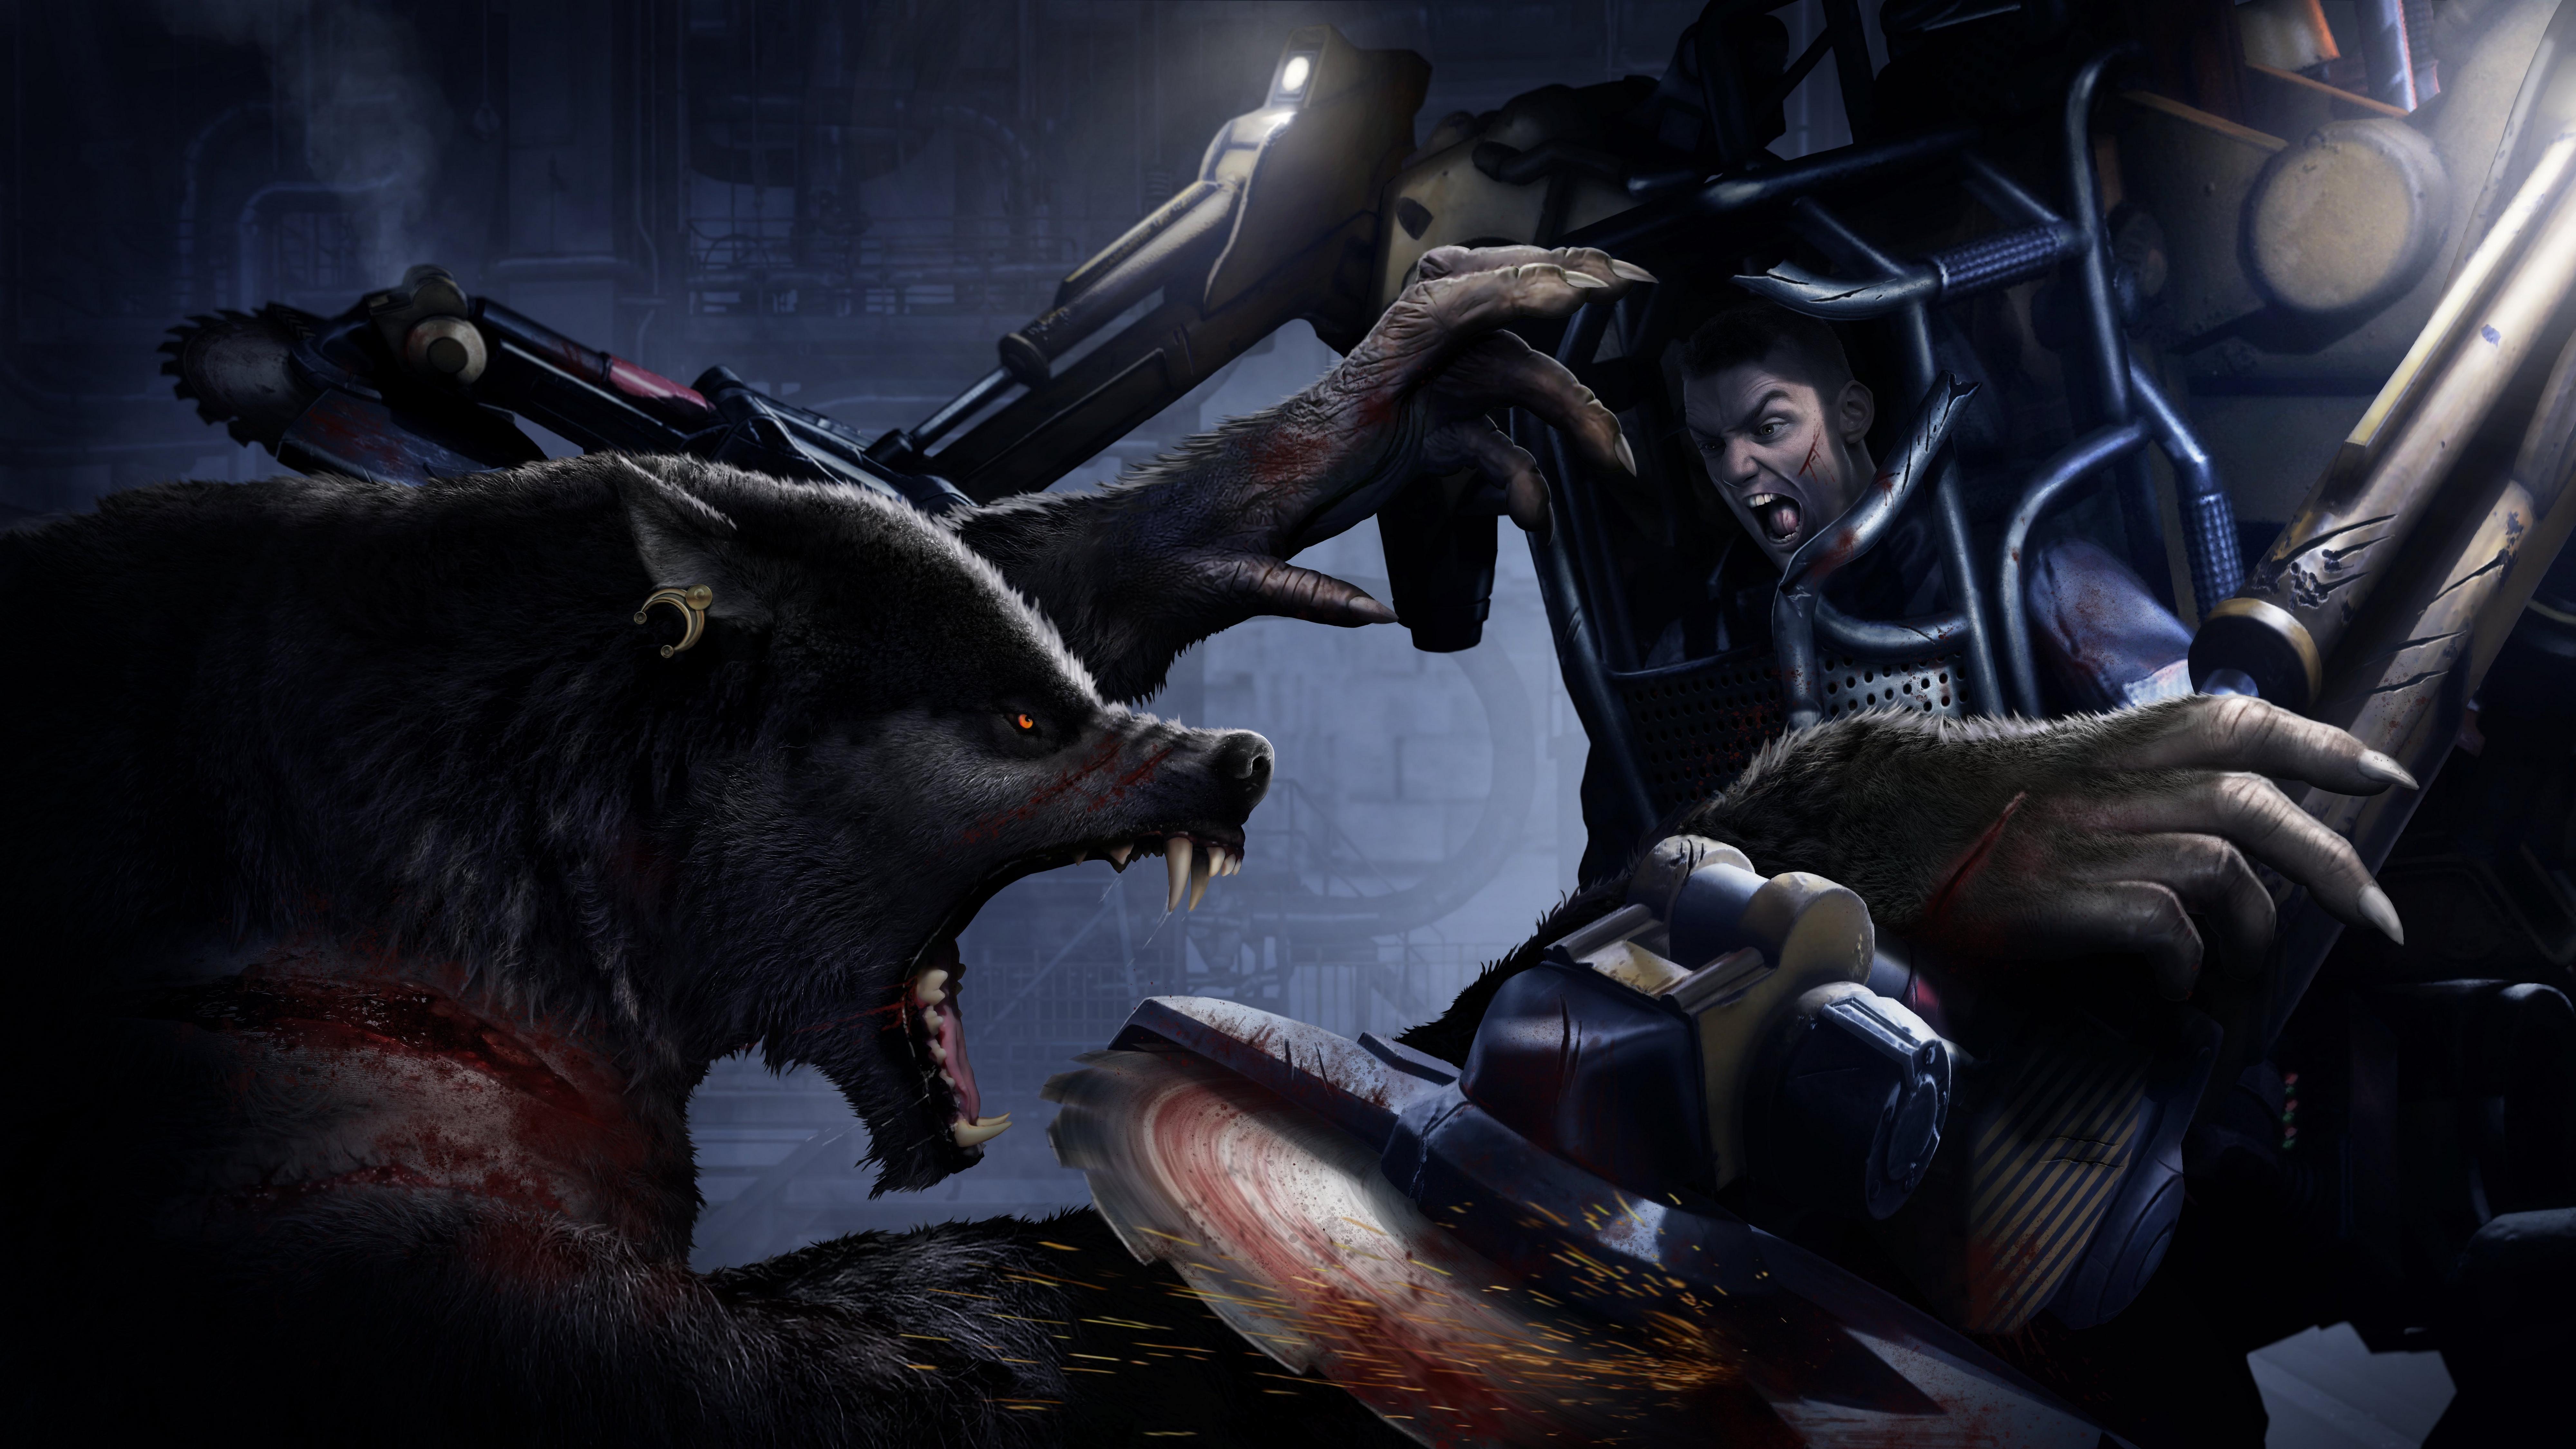 Werewolf: The Apocalypse Earthblood - | PlayStation 4 | GameStop